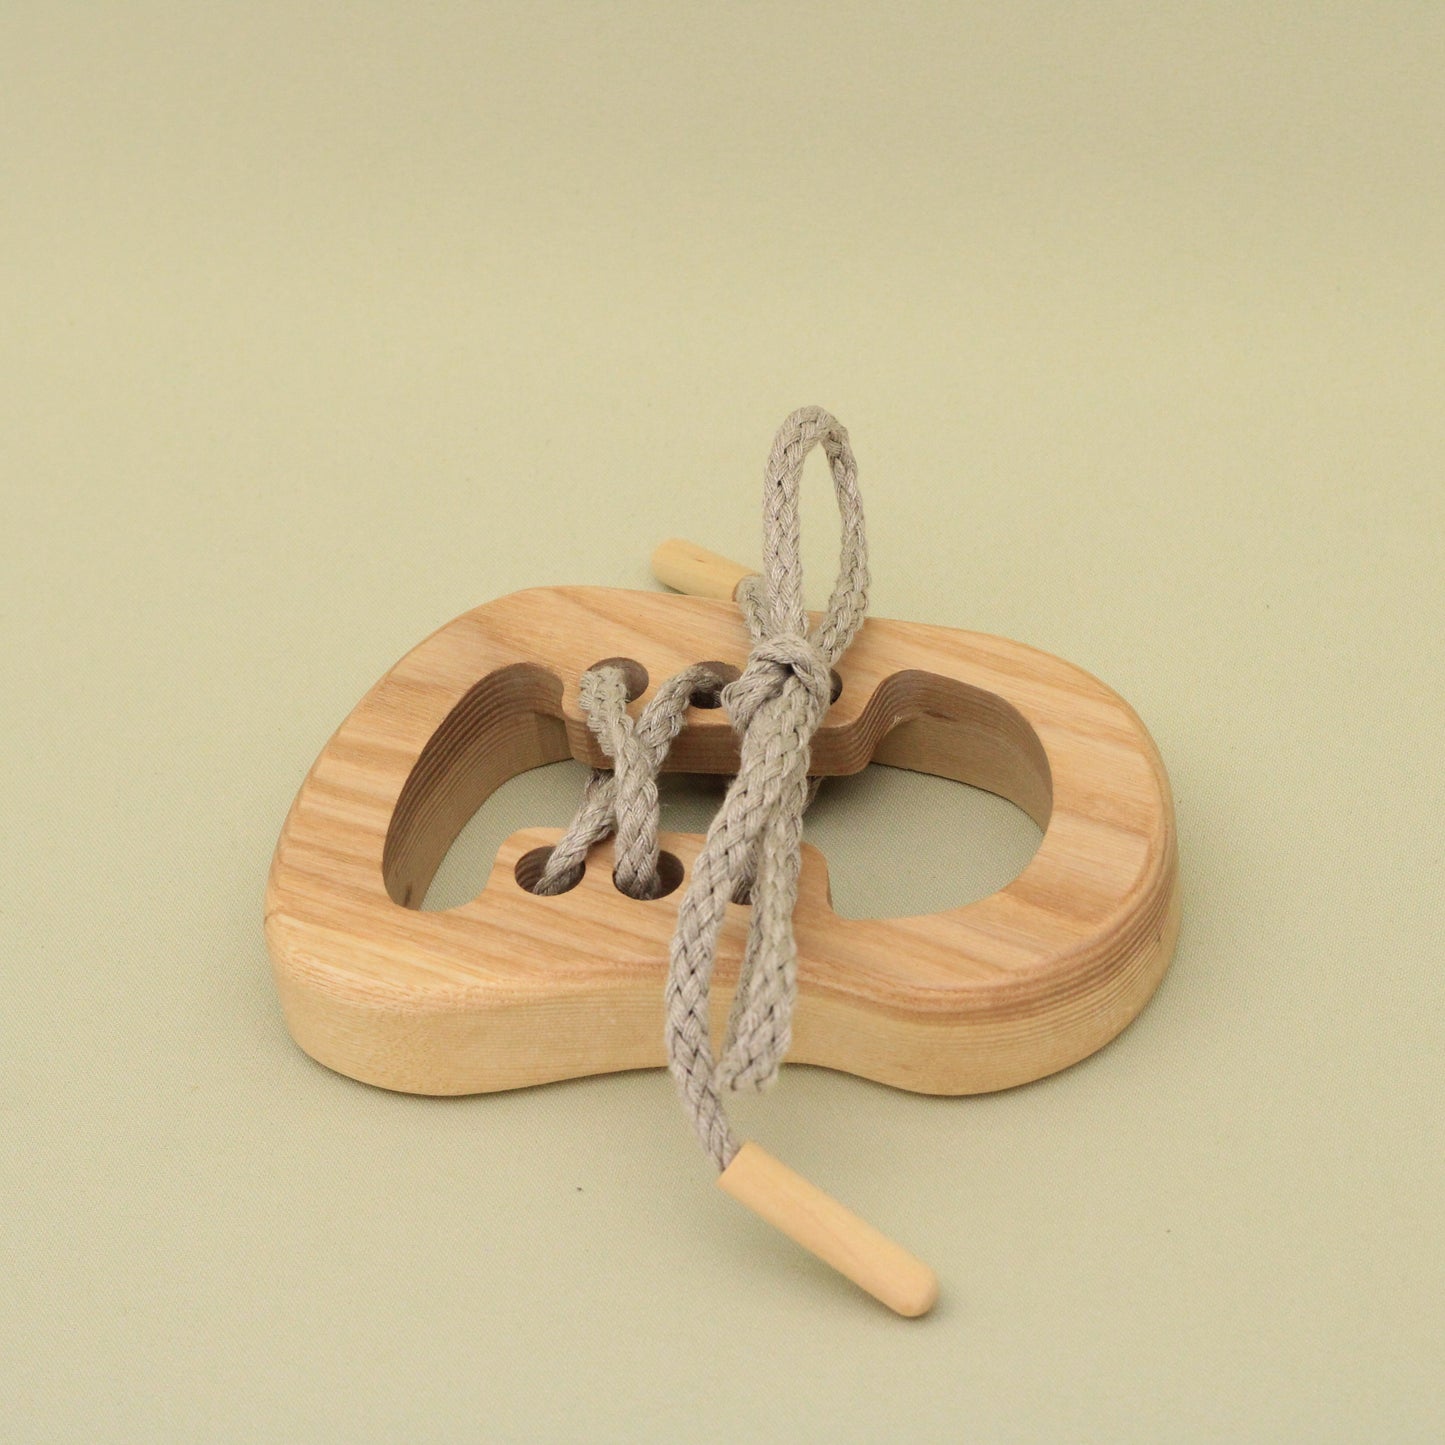 Lotes Toys Natural Wooden Threading Lacing Shoe Riht TT19R